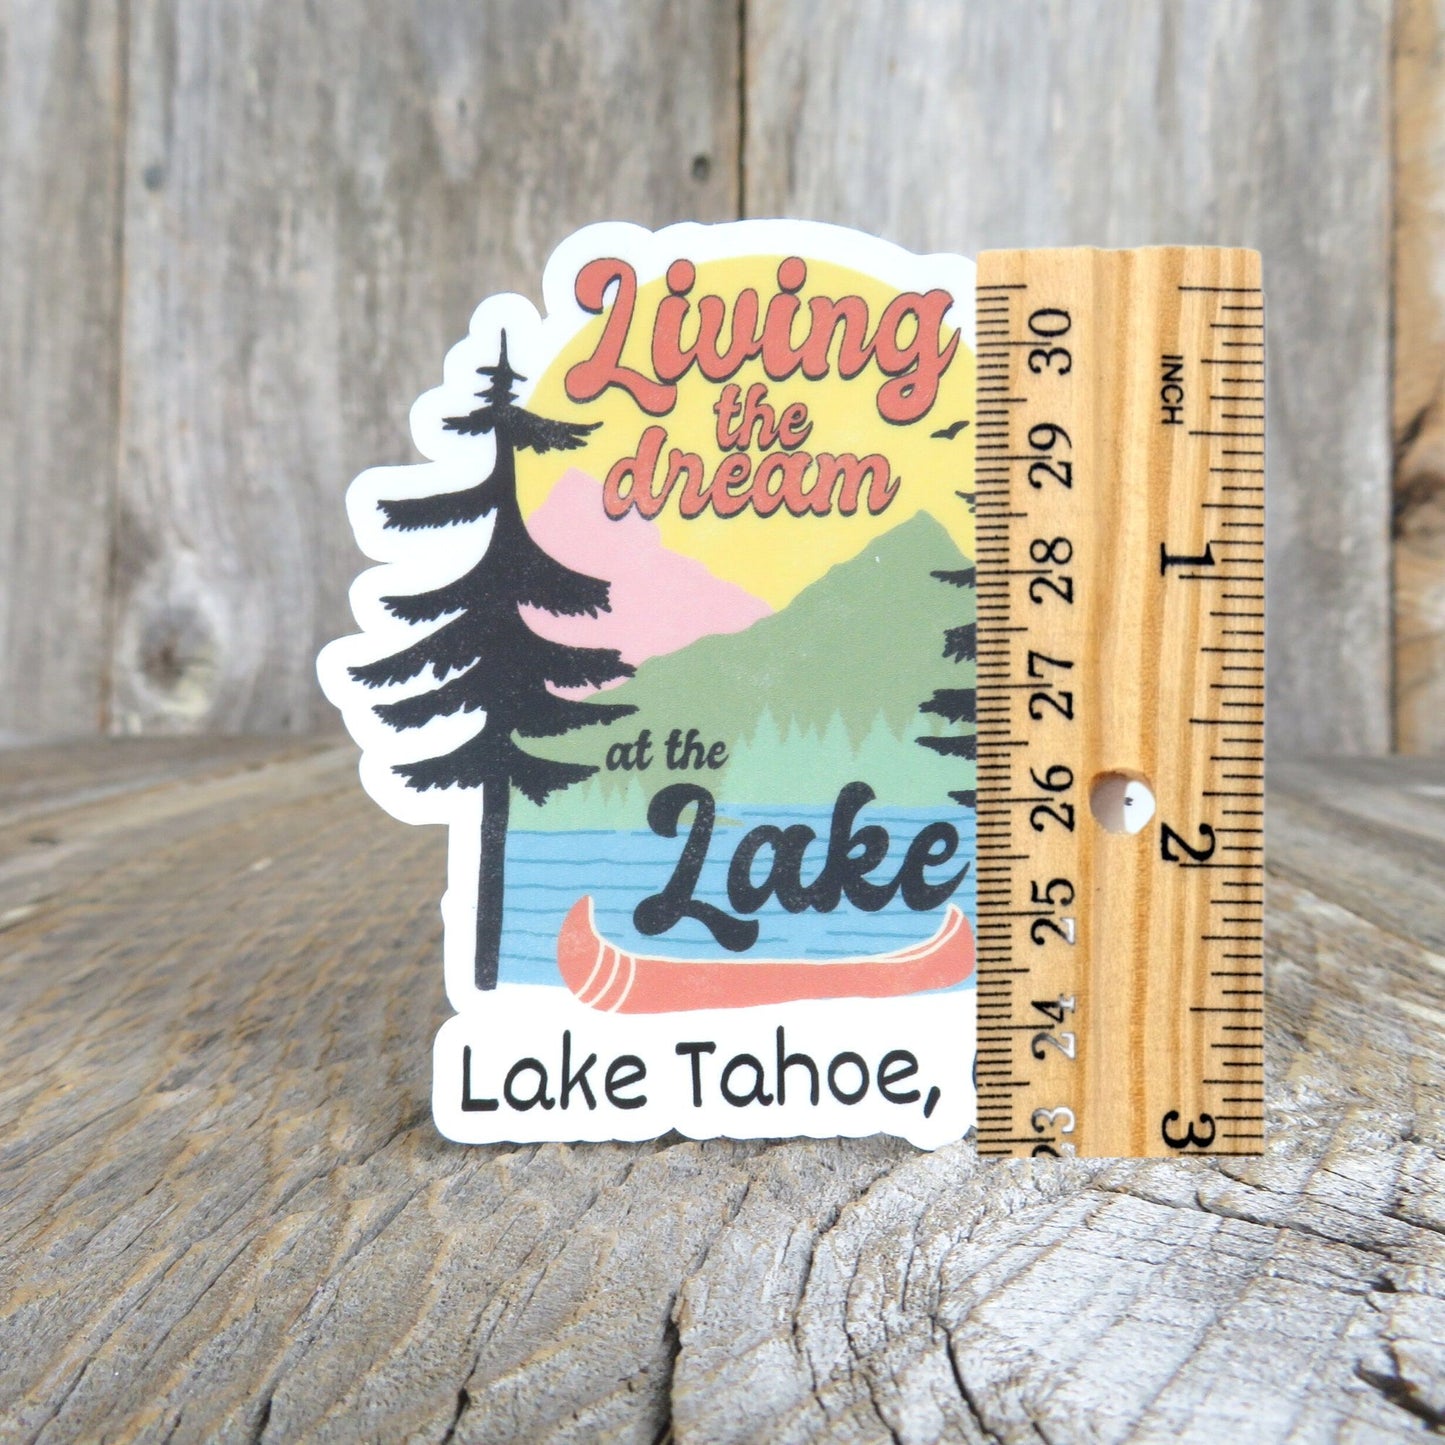 Lake Tahoe Living the Dream at the Lake Sticker California Lake Waterproof Boating Fishing Water Sports Camping Outdoors Retro Colors